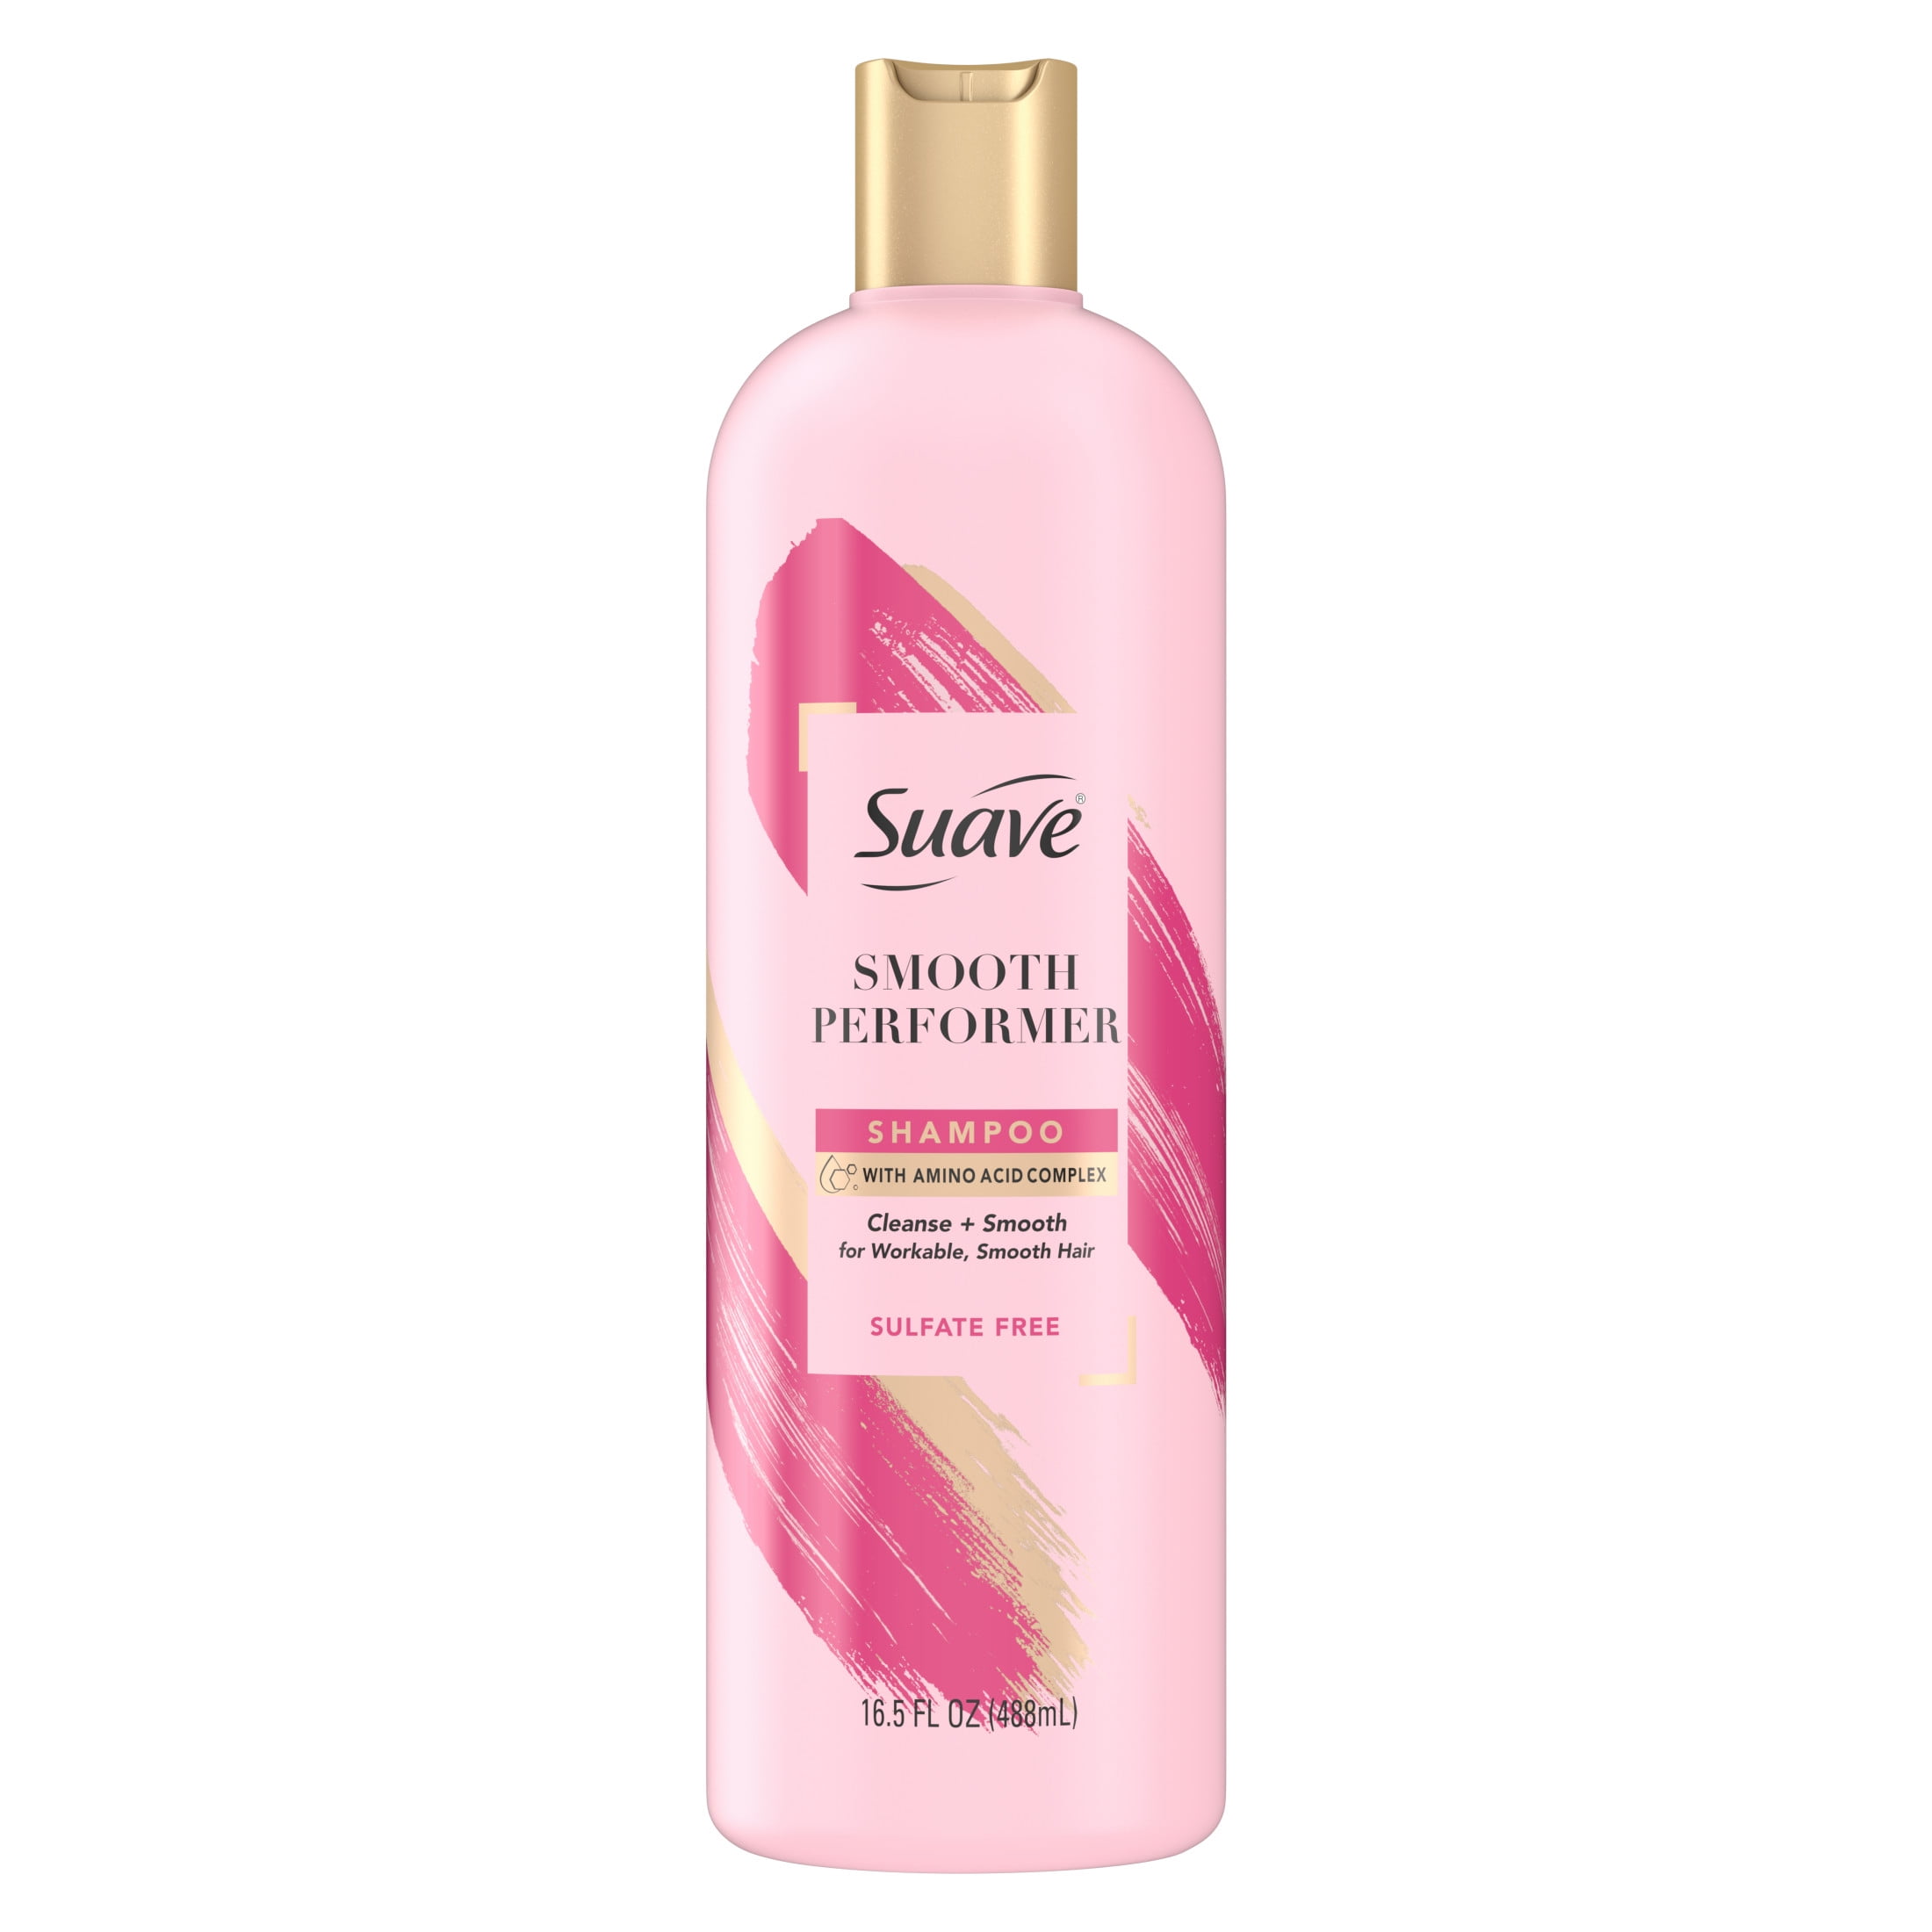 Suave Performer Smoothing Shampoo, 16.5 oz -